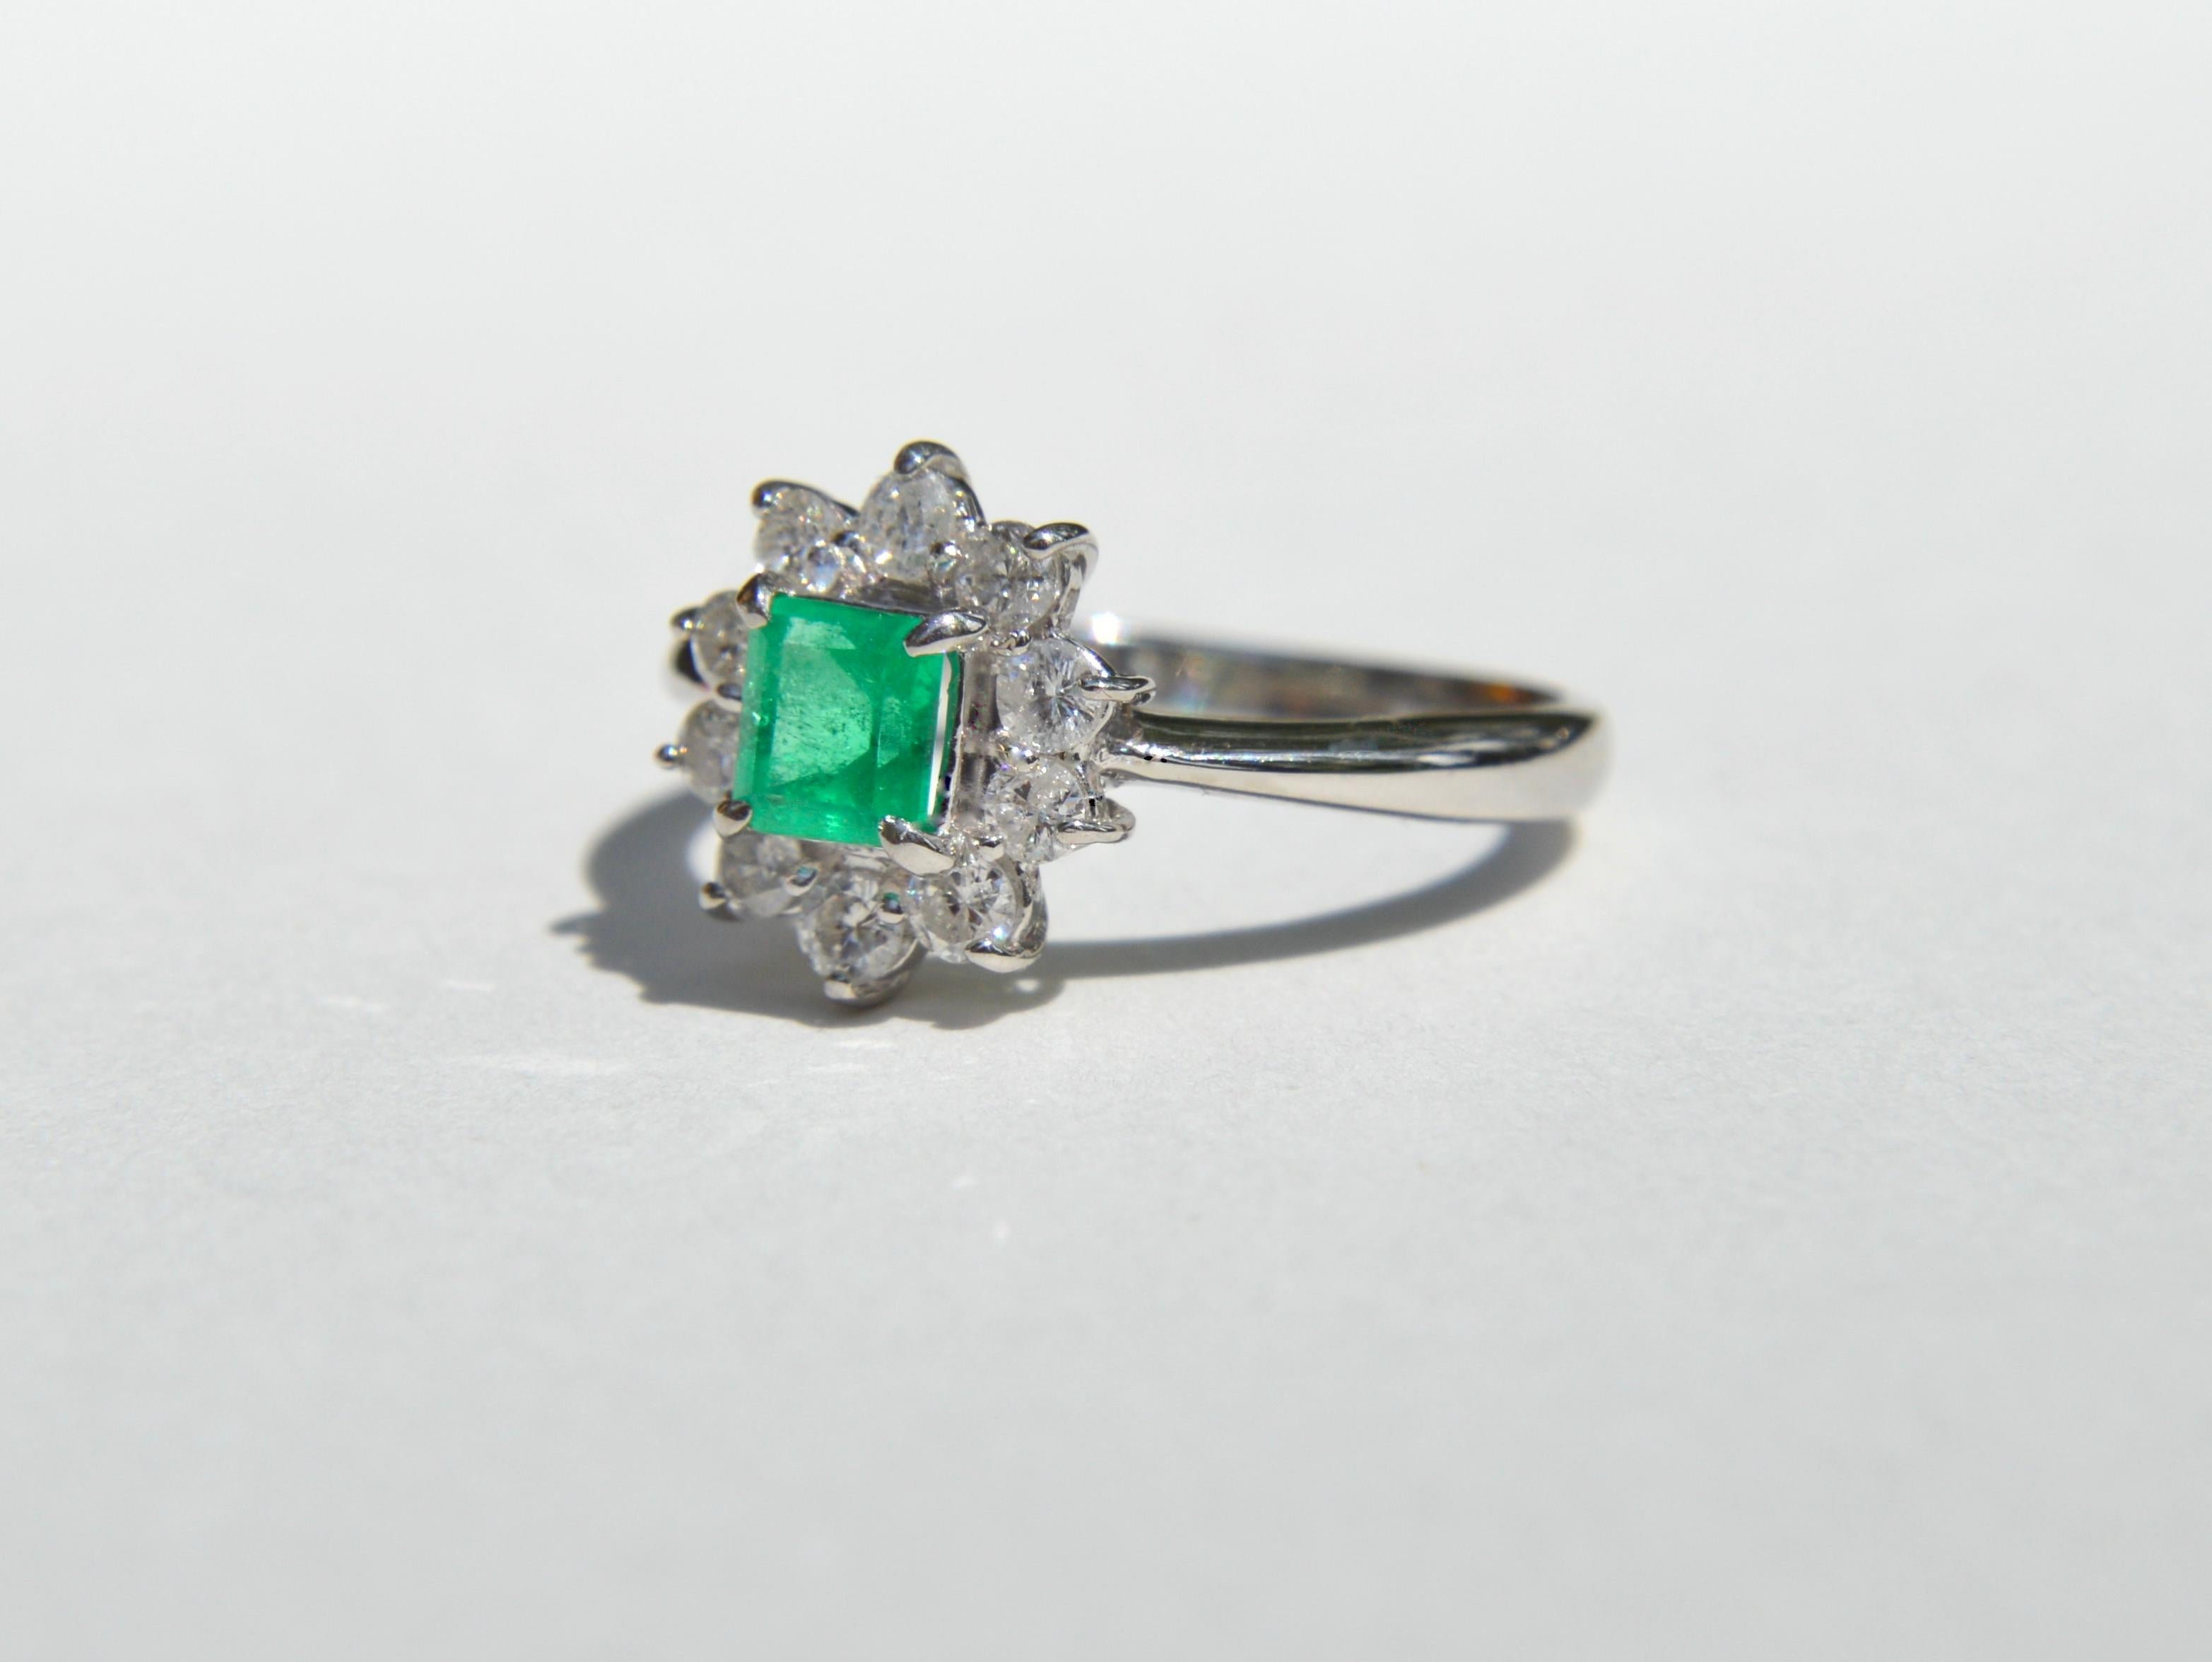 39 carat diamond ring